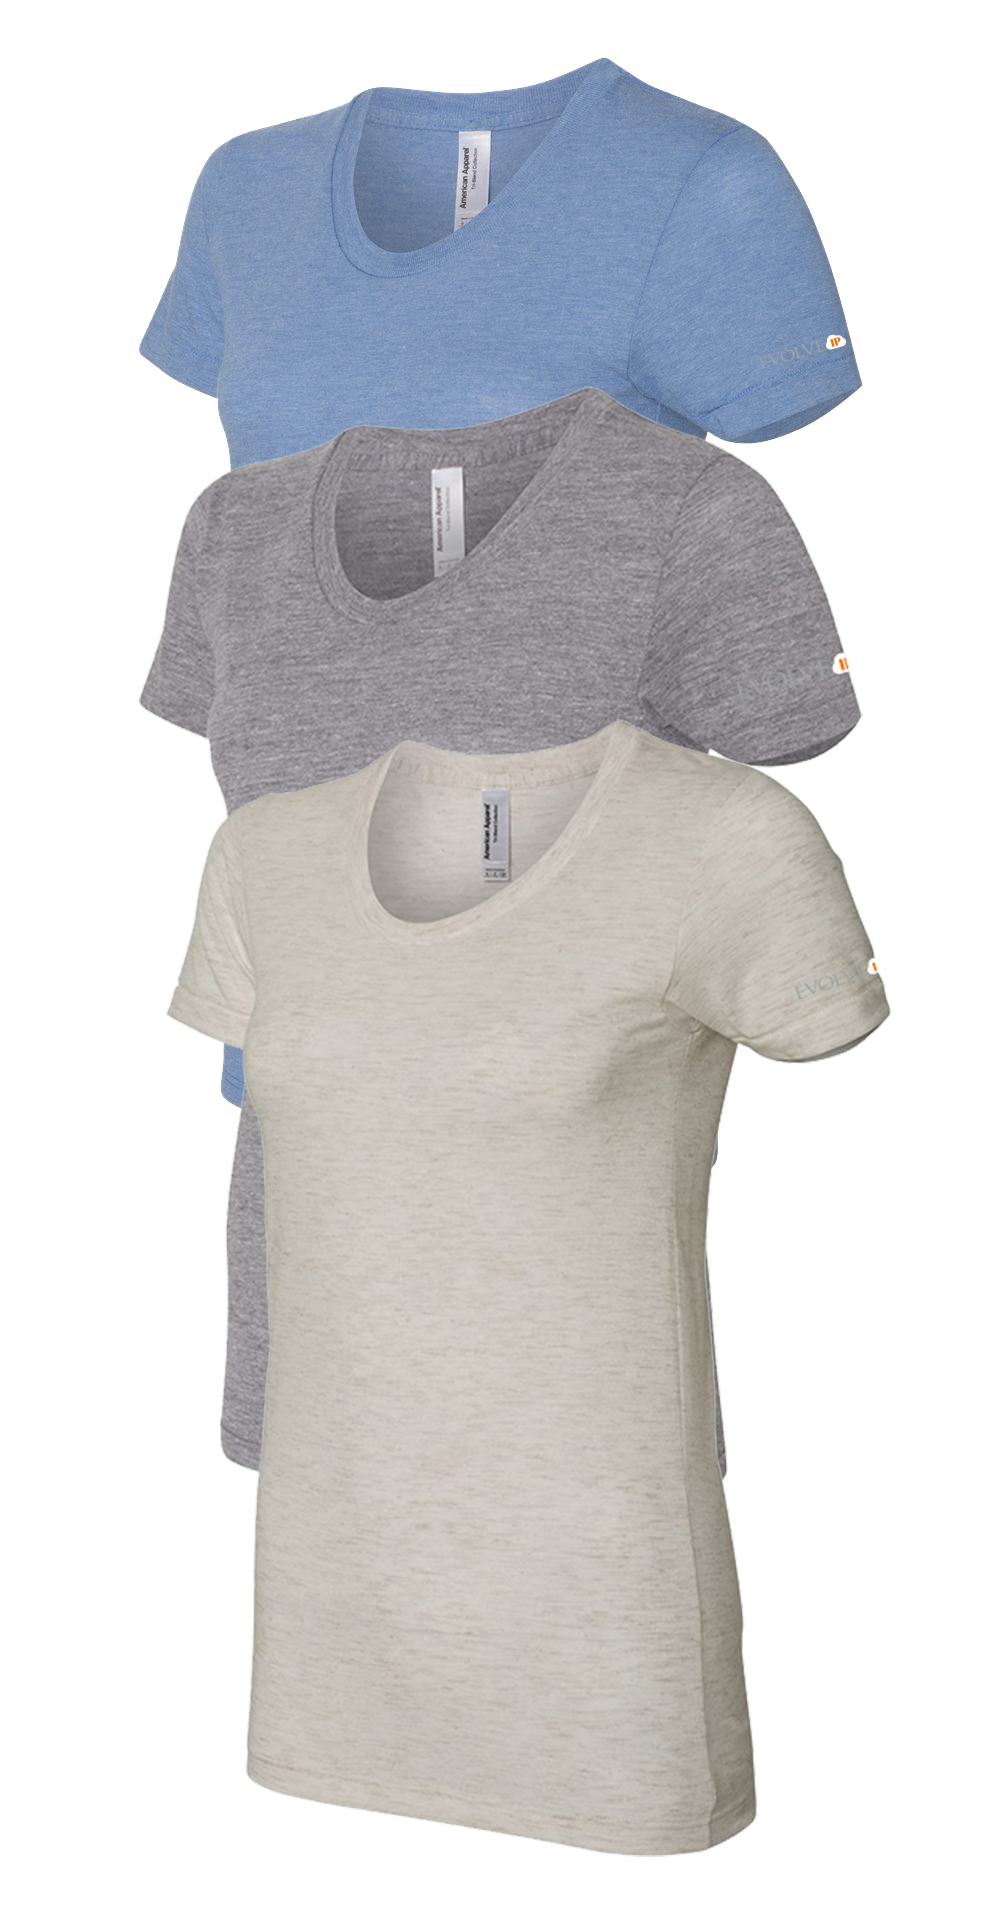 Evolve Women's Tri-Blend Short Sleeve Tshirt